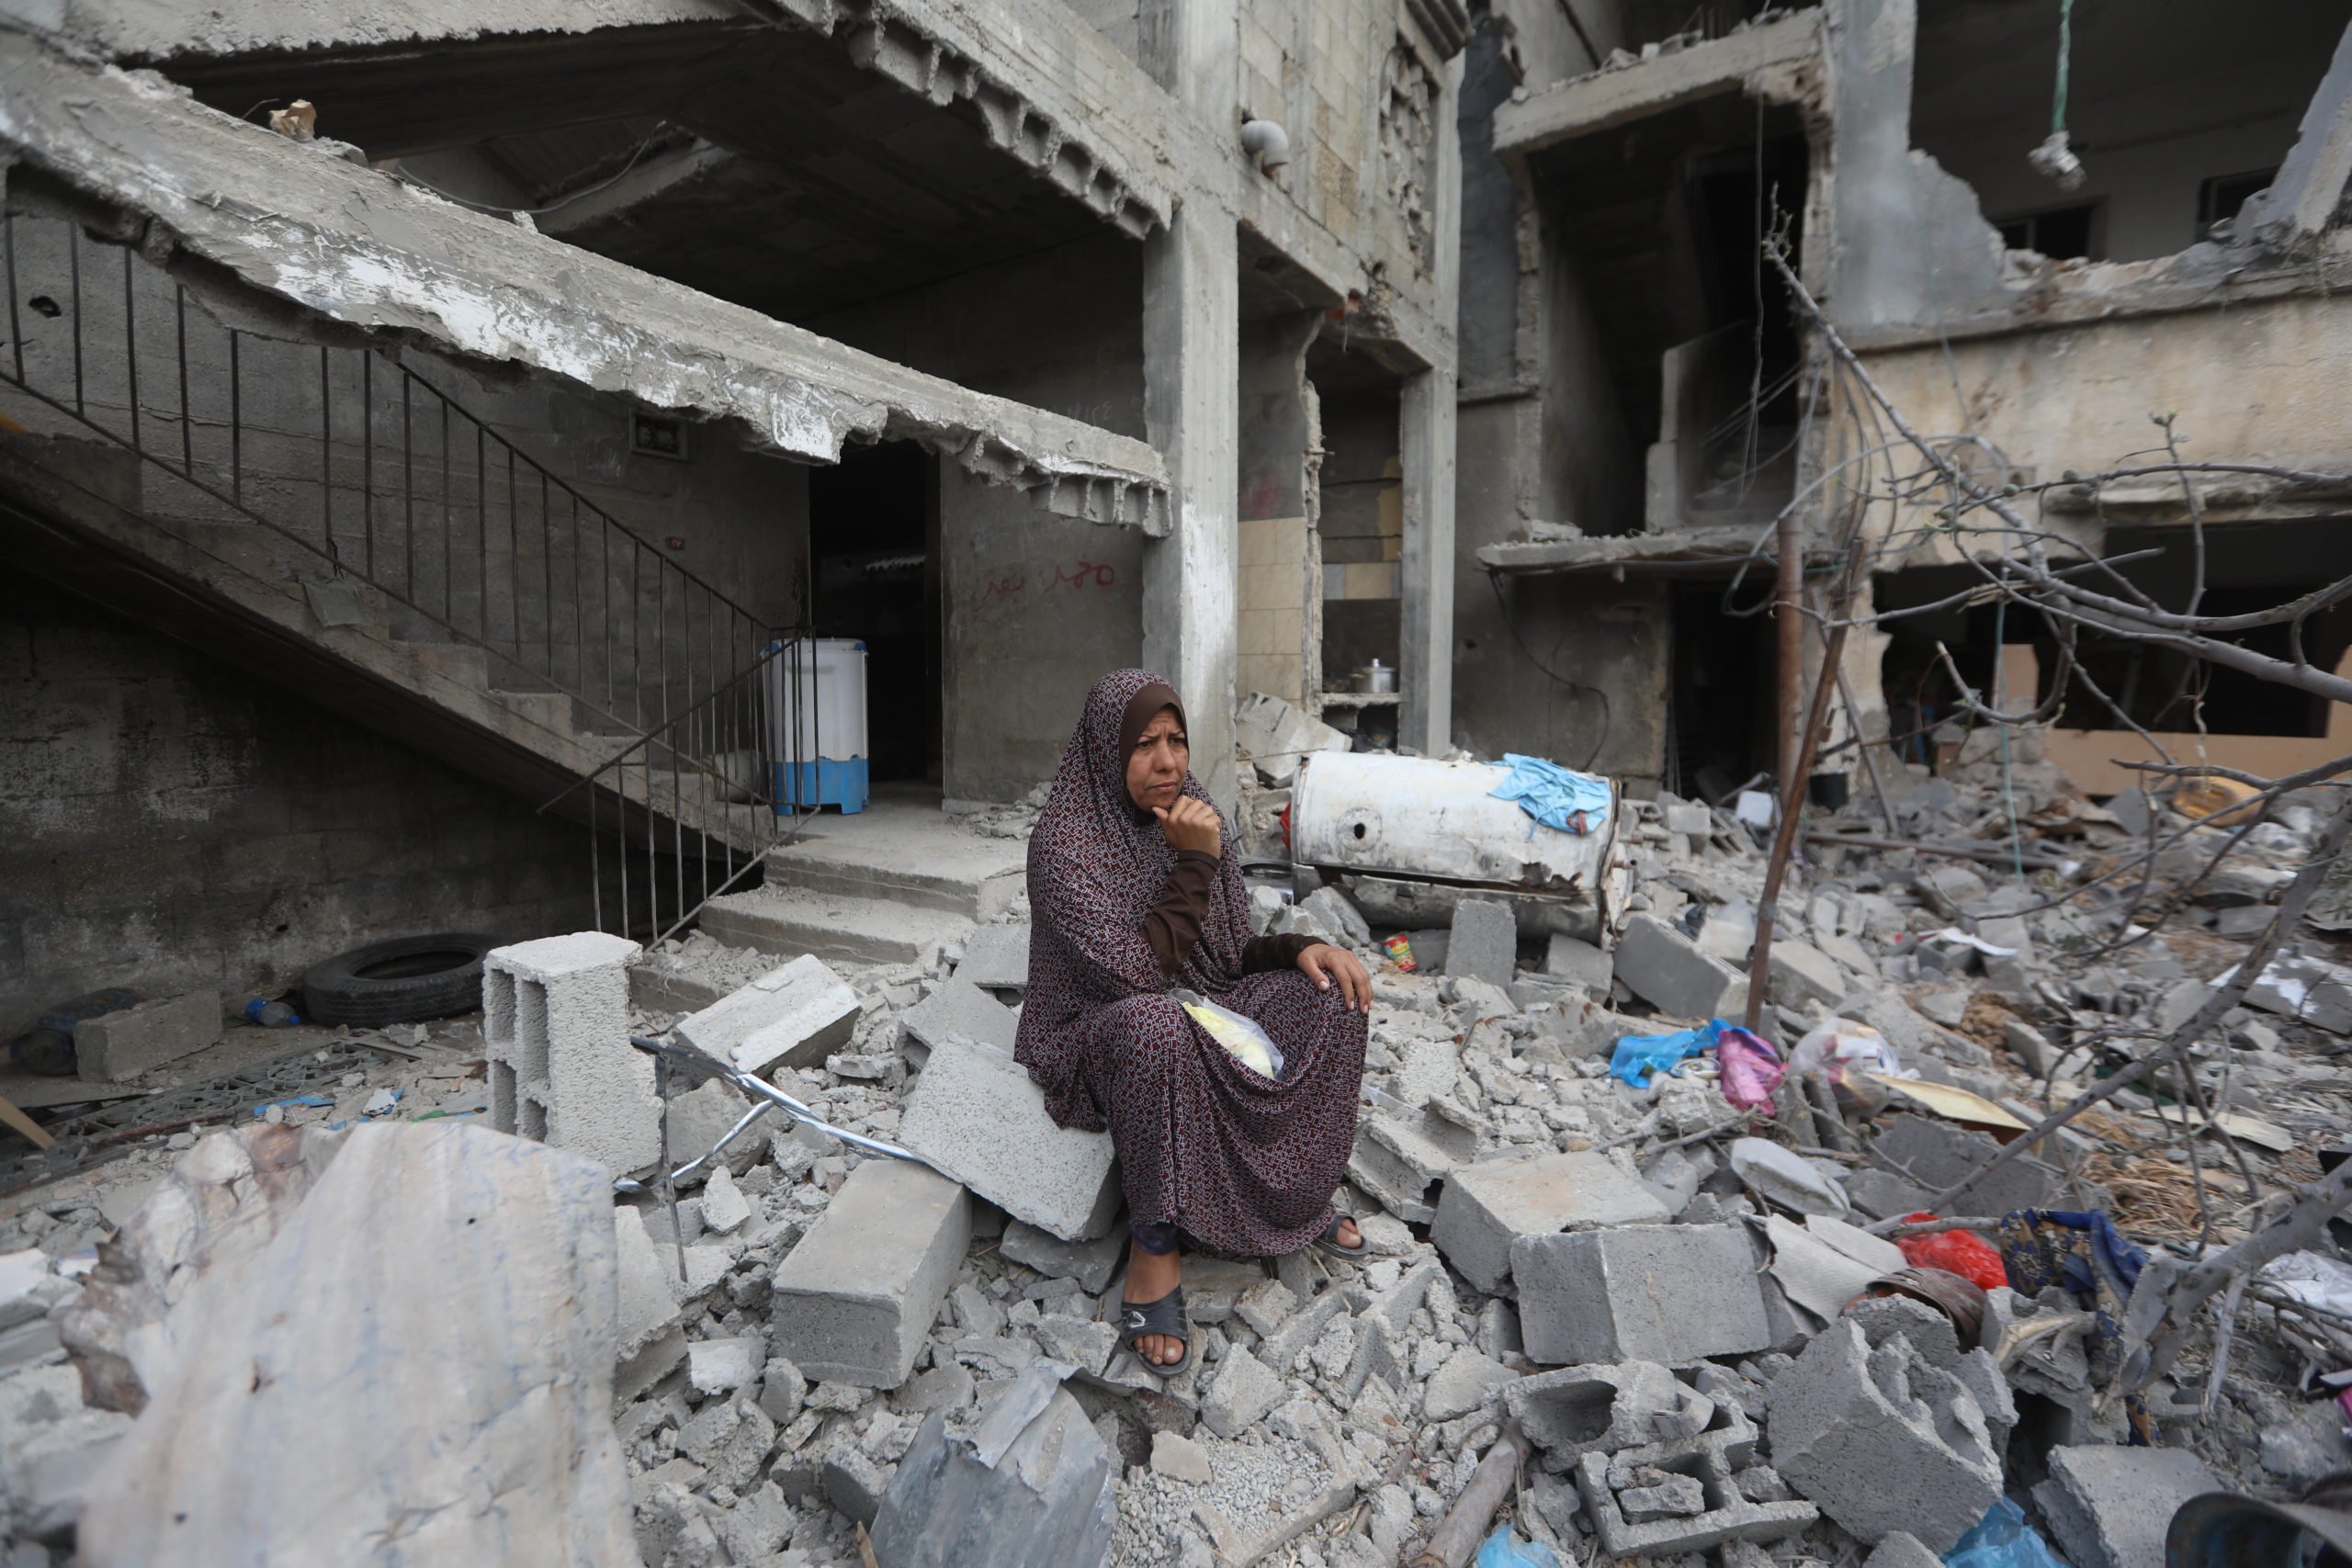 Streets of Gaza during Israel’s bombing, May 2021. © NPA Palestine/Mohammed Zaanoun (2021)